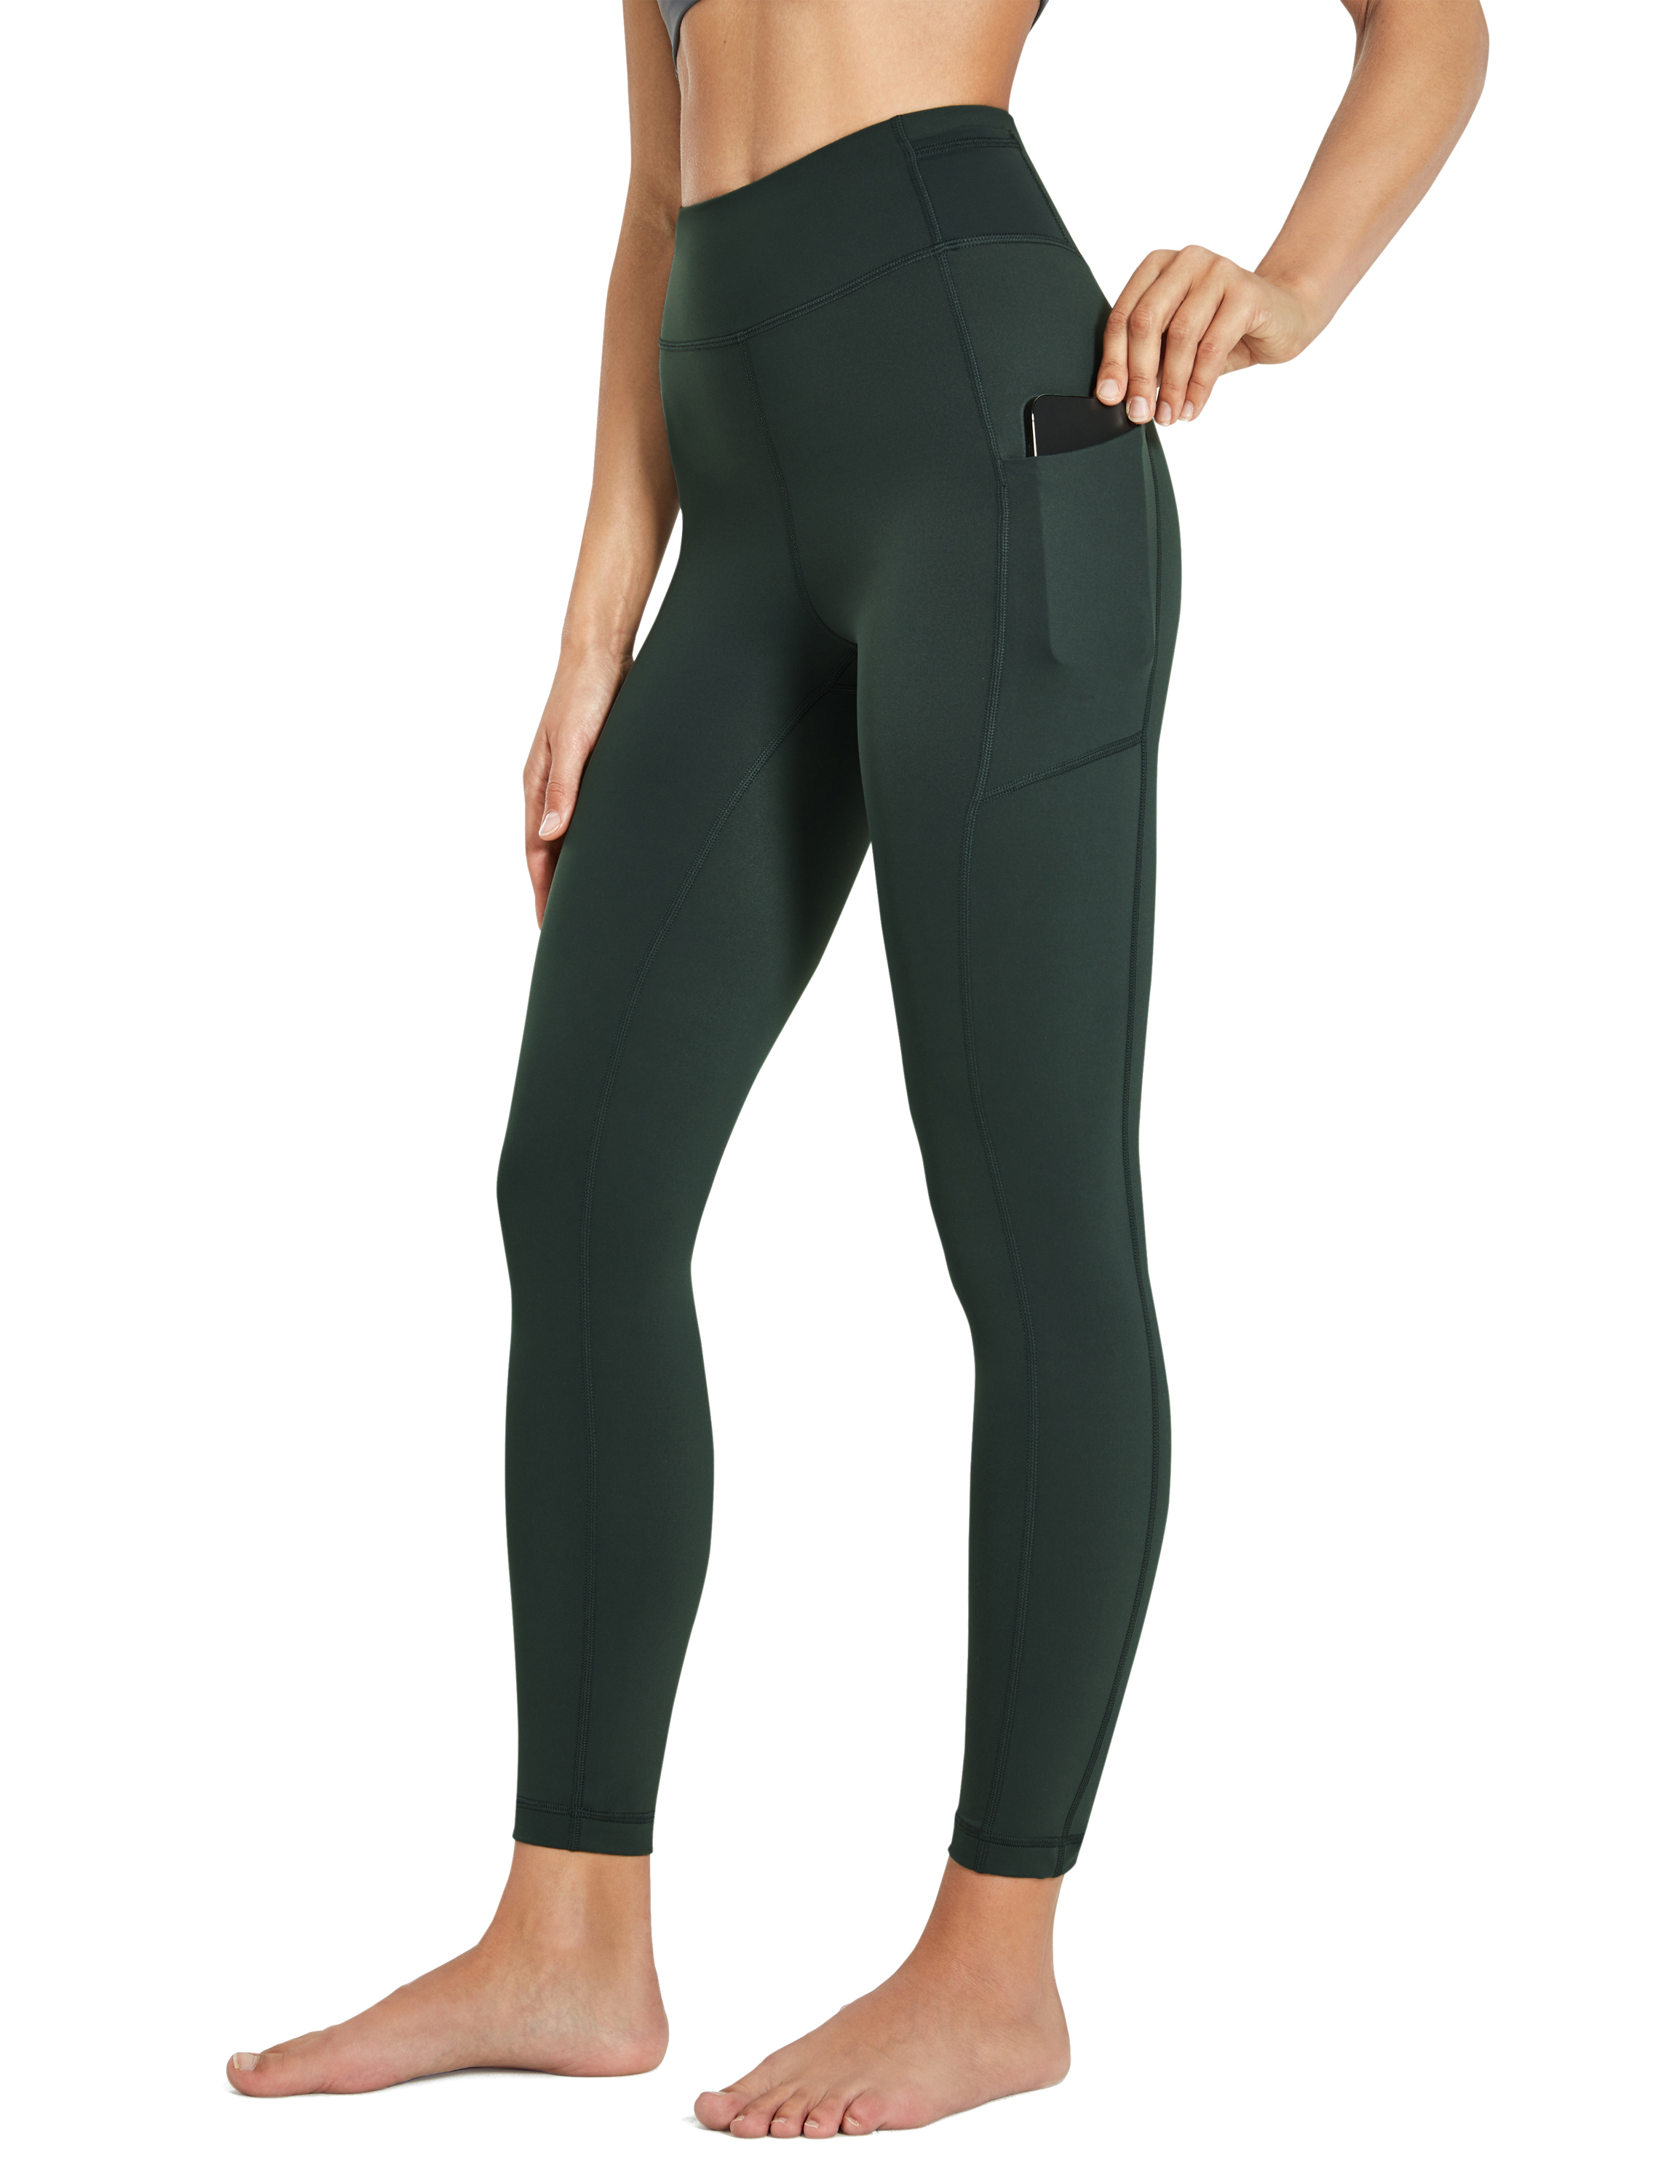 CRZ YOGA Women's Leggings High Waisted Yoga Pants Pockets 25 Inseam XS 0/2  New